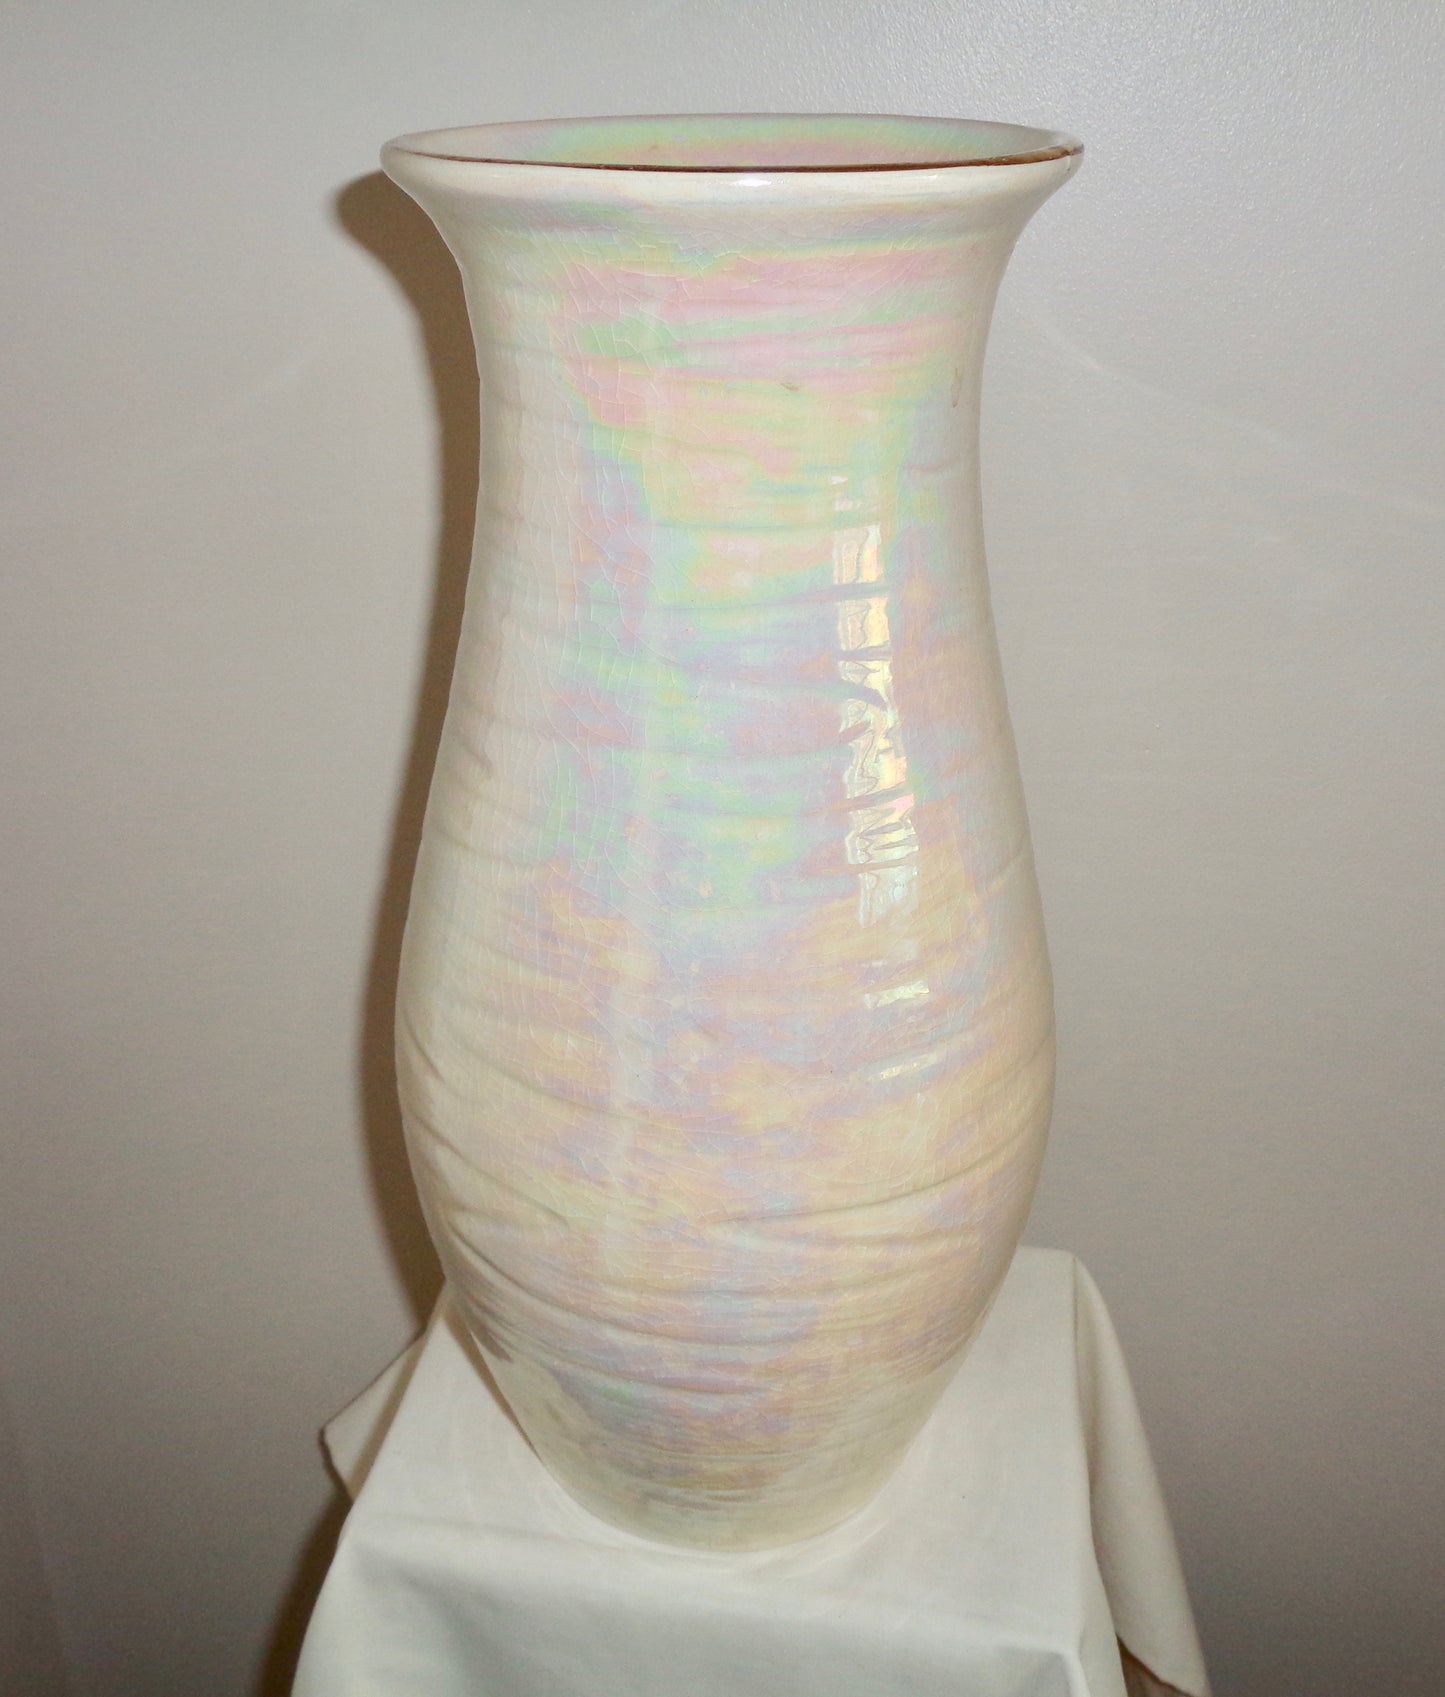 1950s Arthur Wood Pottery Vernon 5209 Lustre Vase